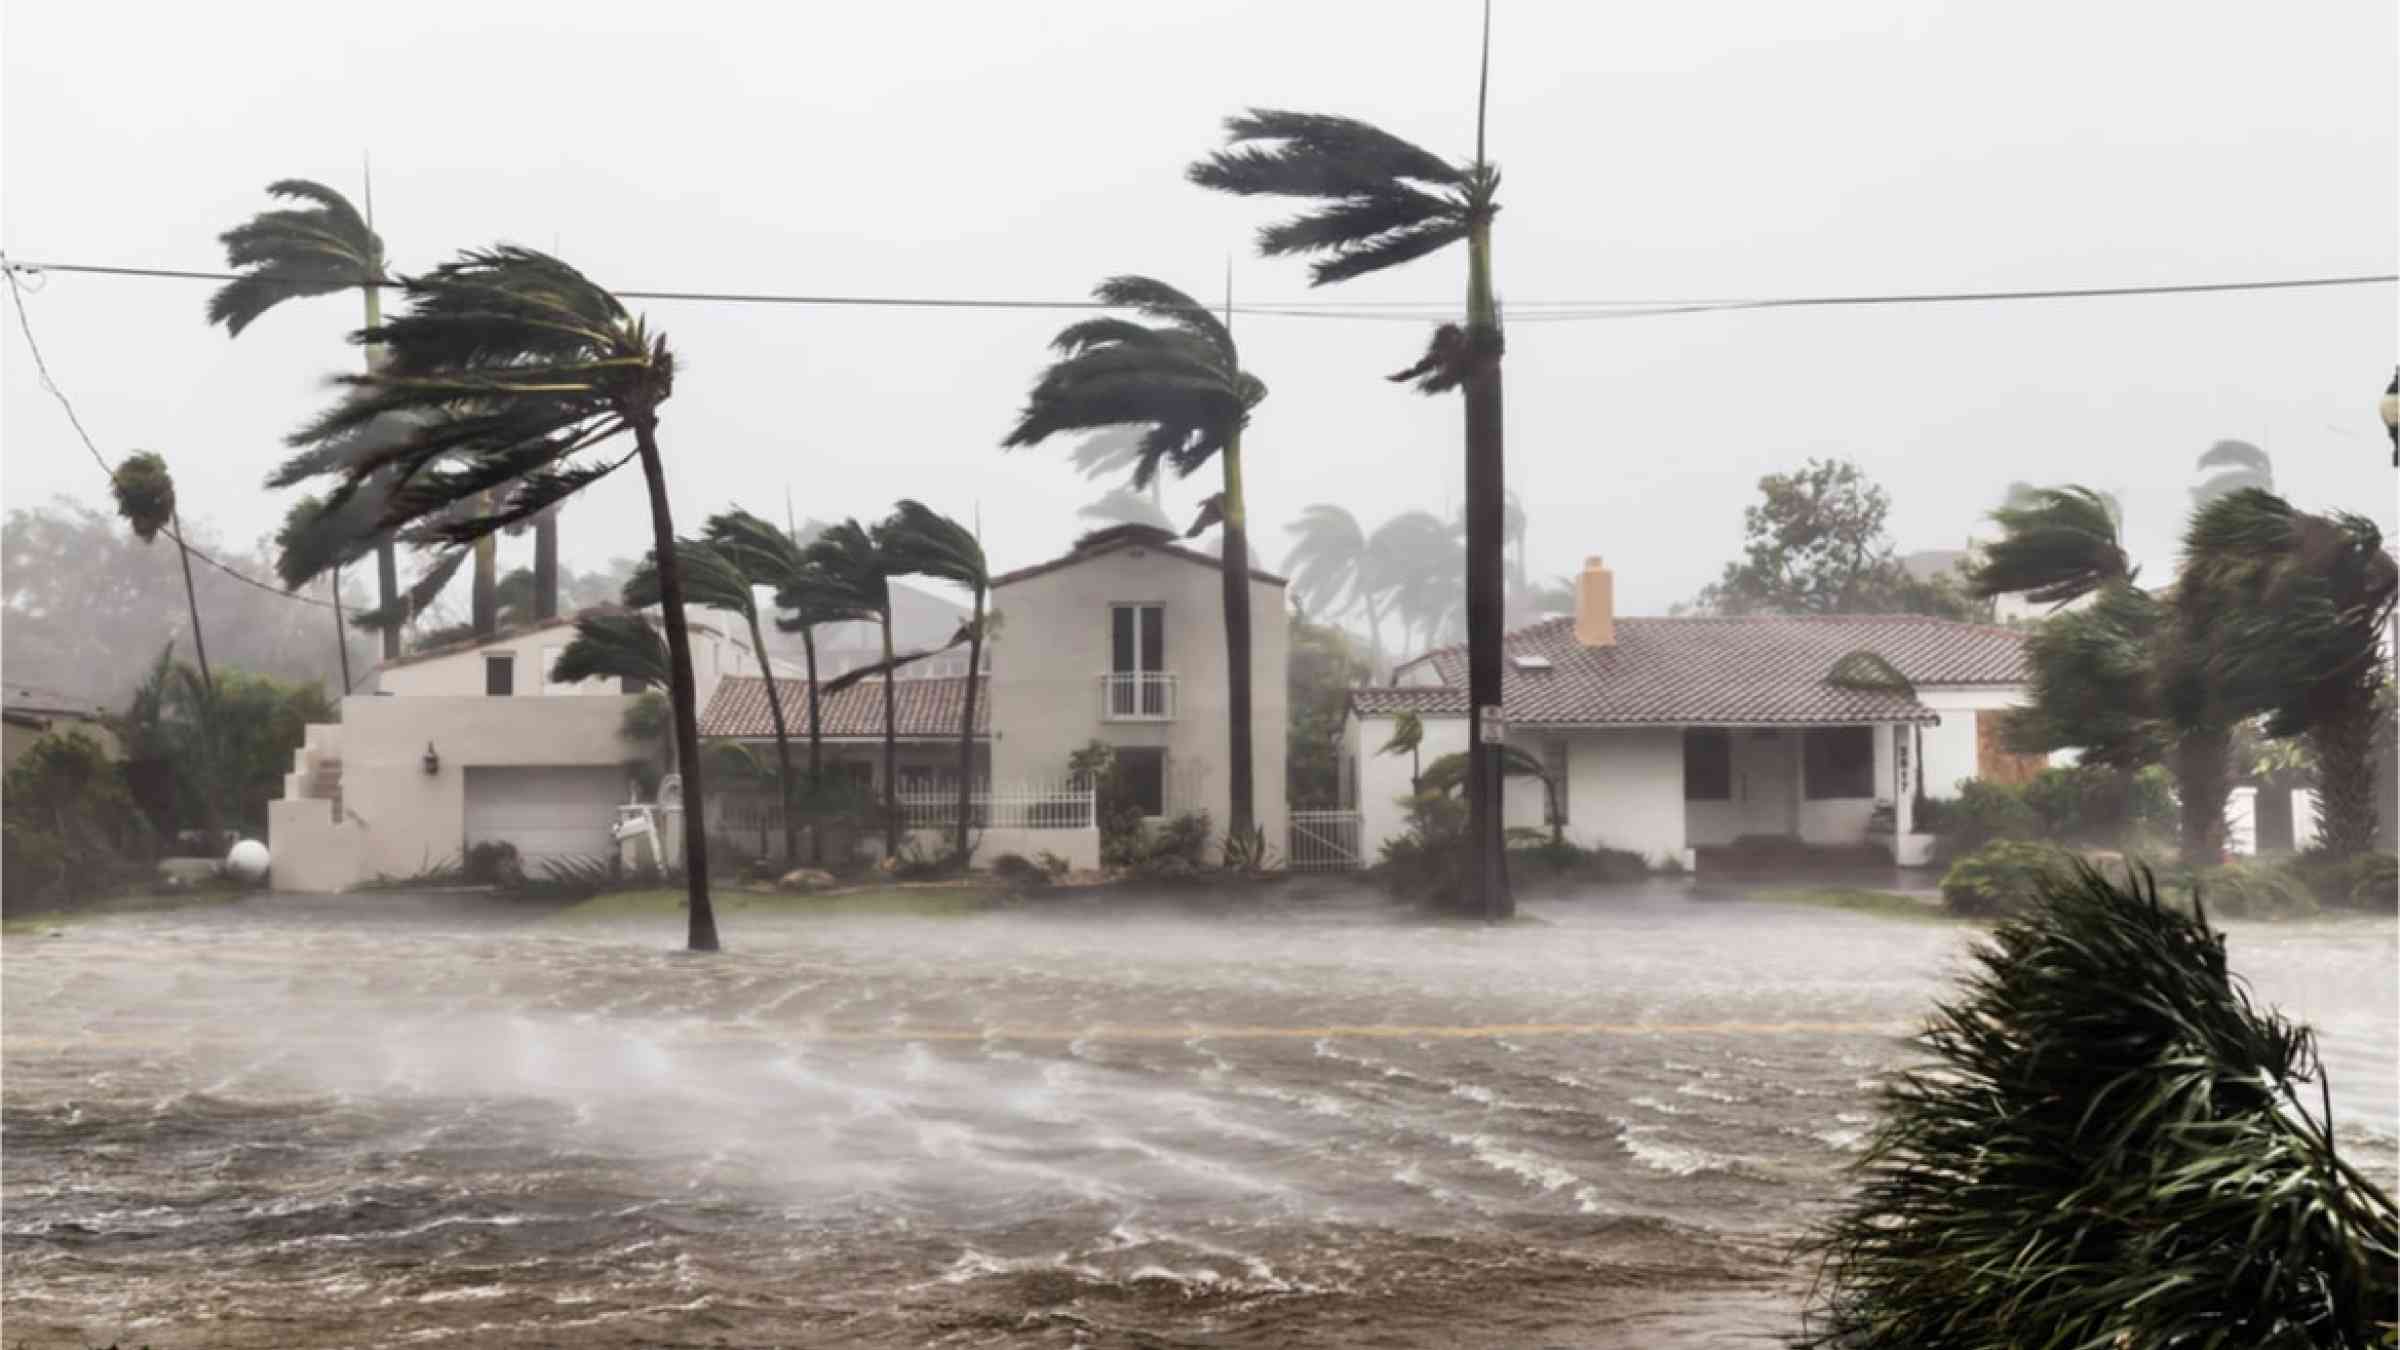 A flooded street after hurricane Irma hit Florida, USA.